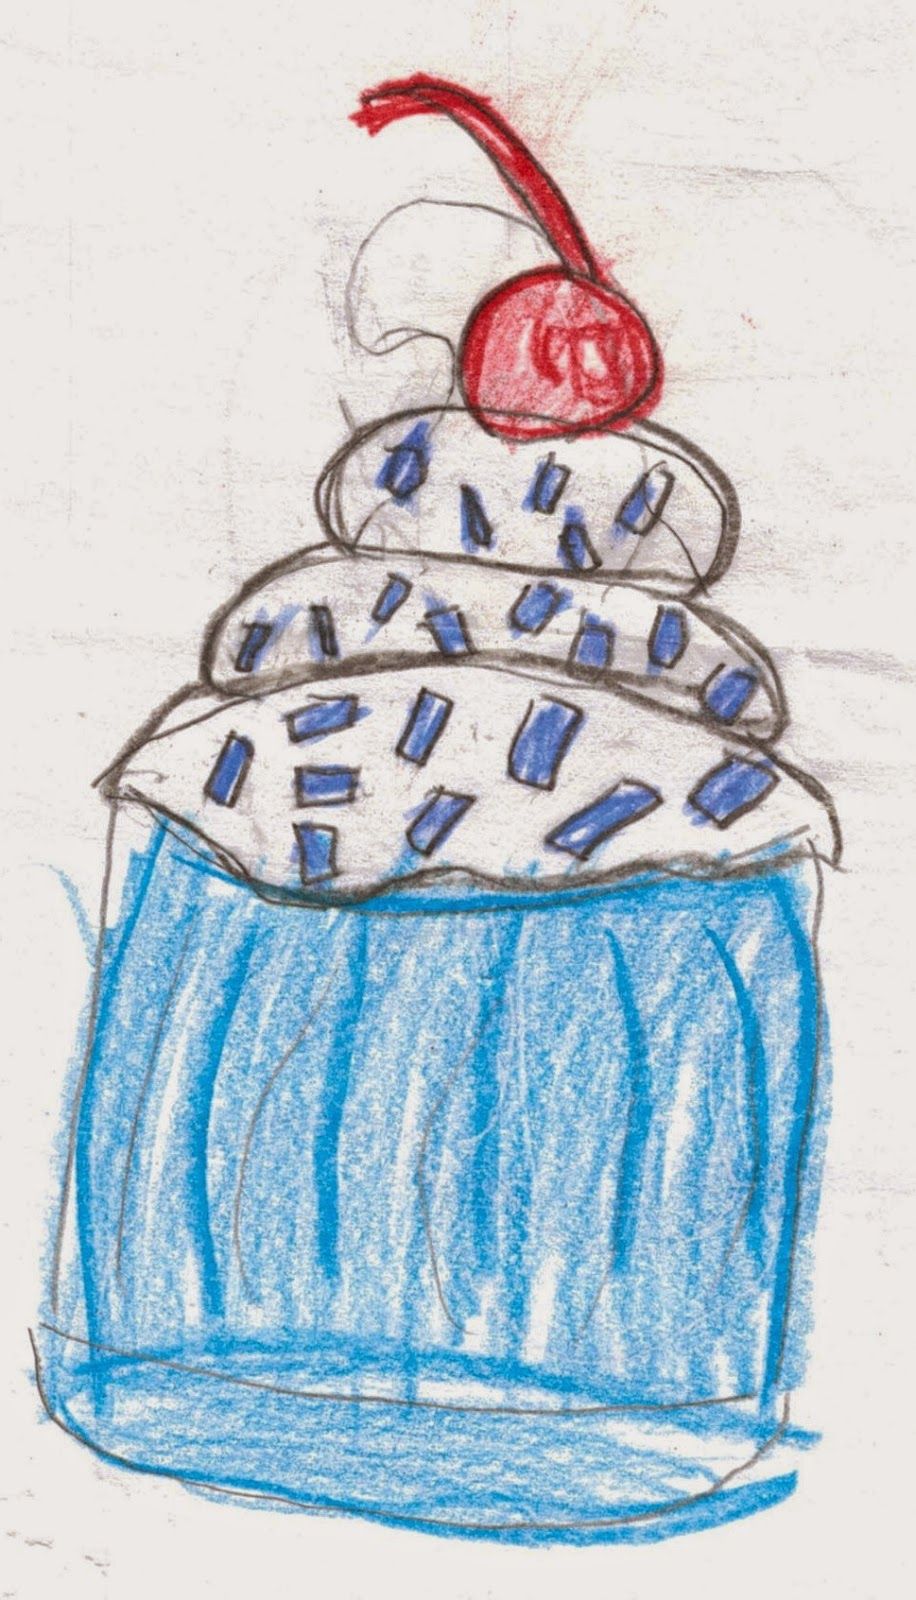 Camper Creations: The Magical Cupcake